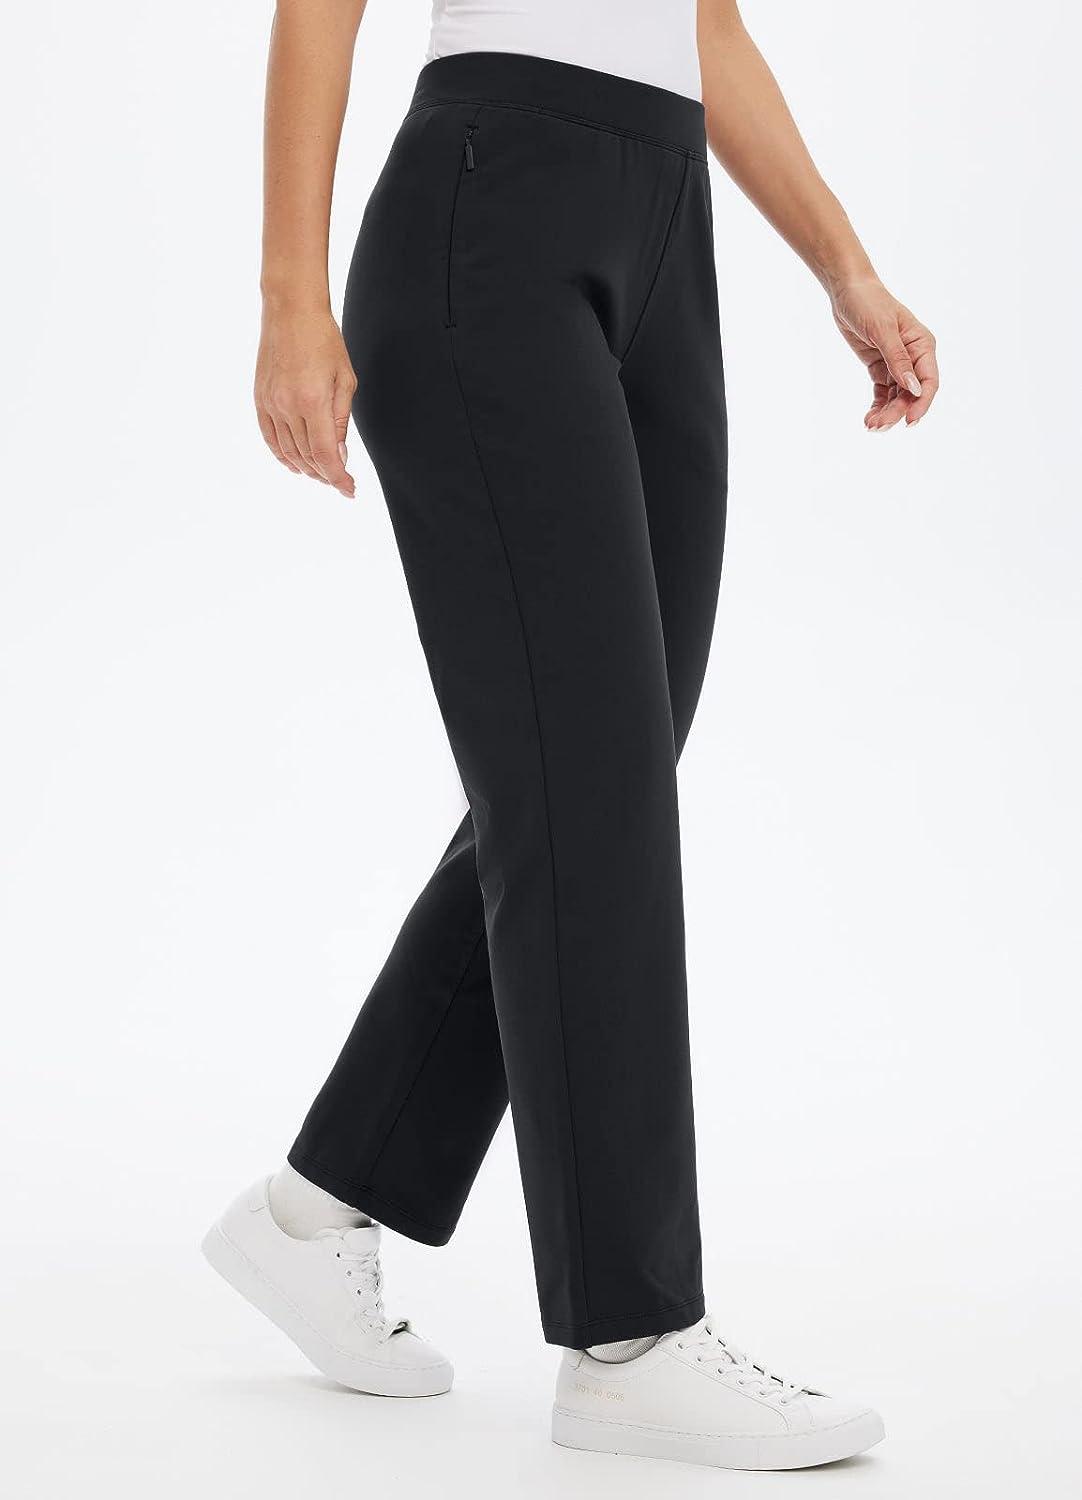 BALEAF Women's Fleece Lined Dress Pants with Pockets, Yoga Straight Leg  Pants High Waist Work Slacks Business Casual